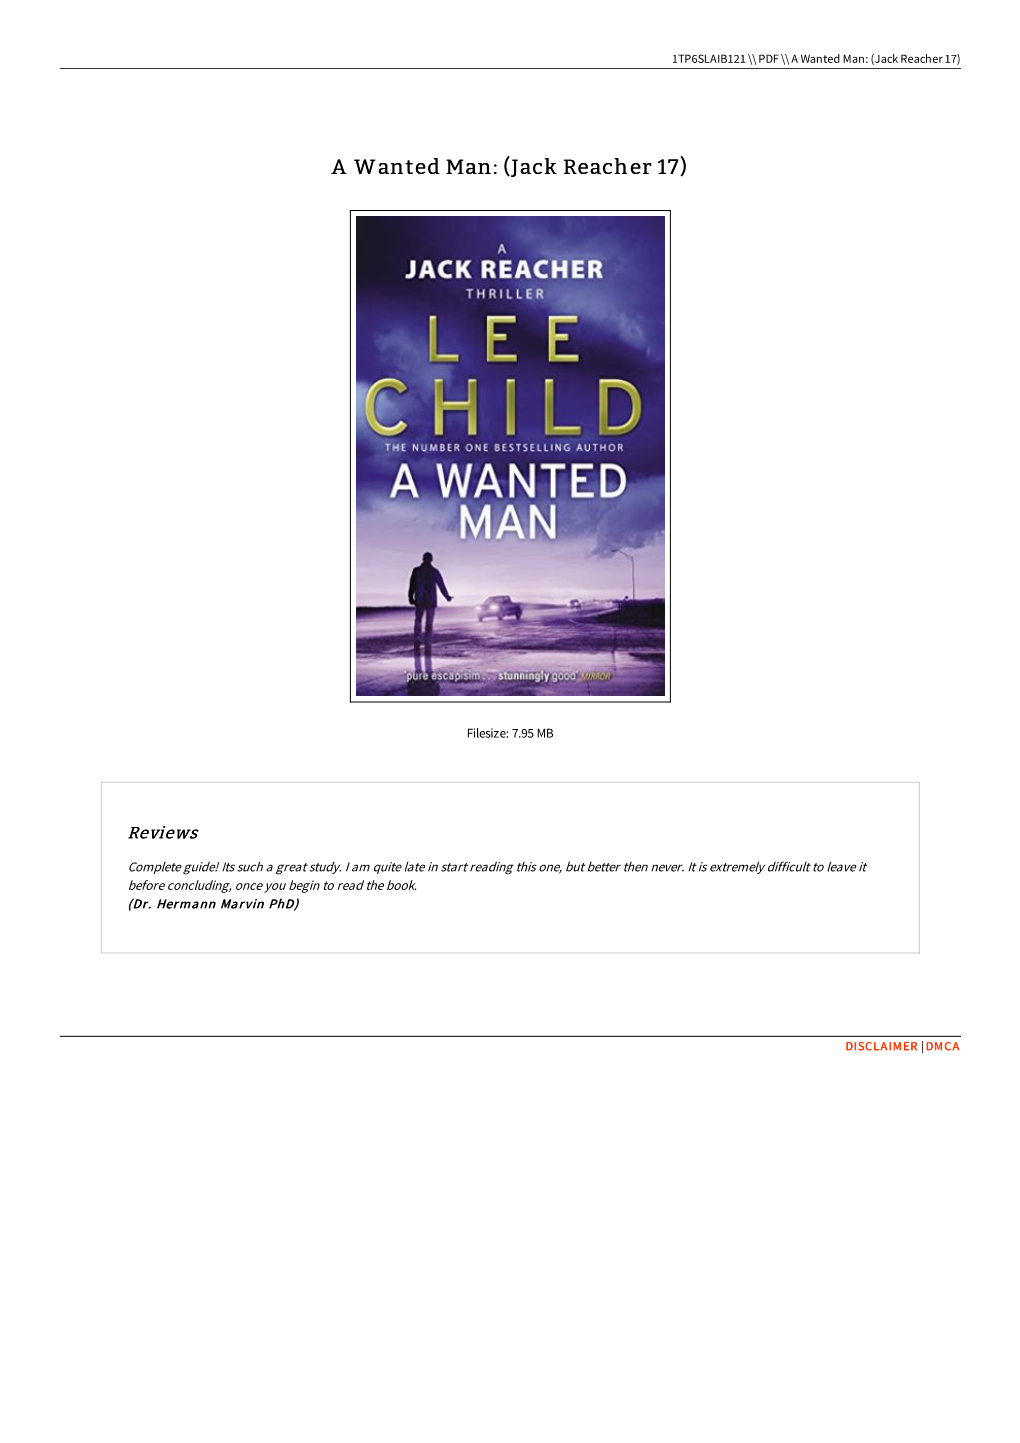 Download Ebook // a Wanted Man: (Jack Reacher 17) « P30PBYO8IWNE